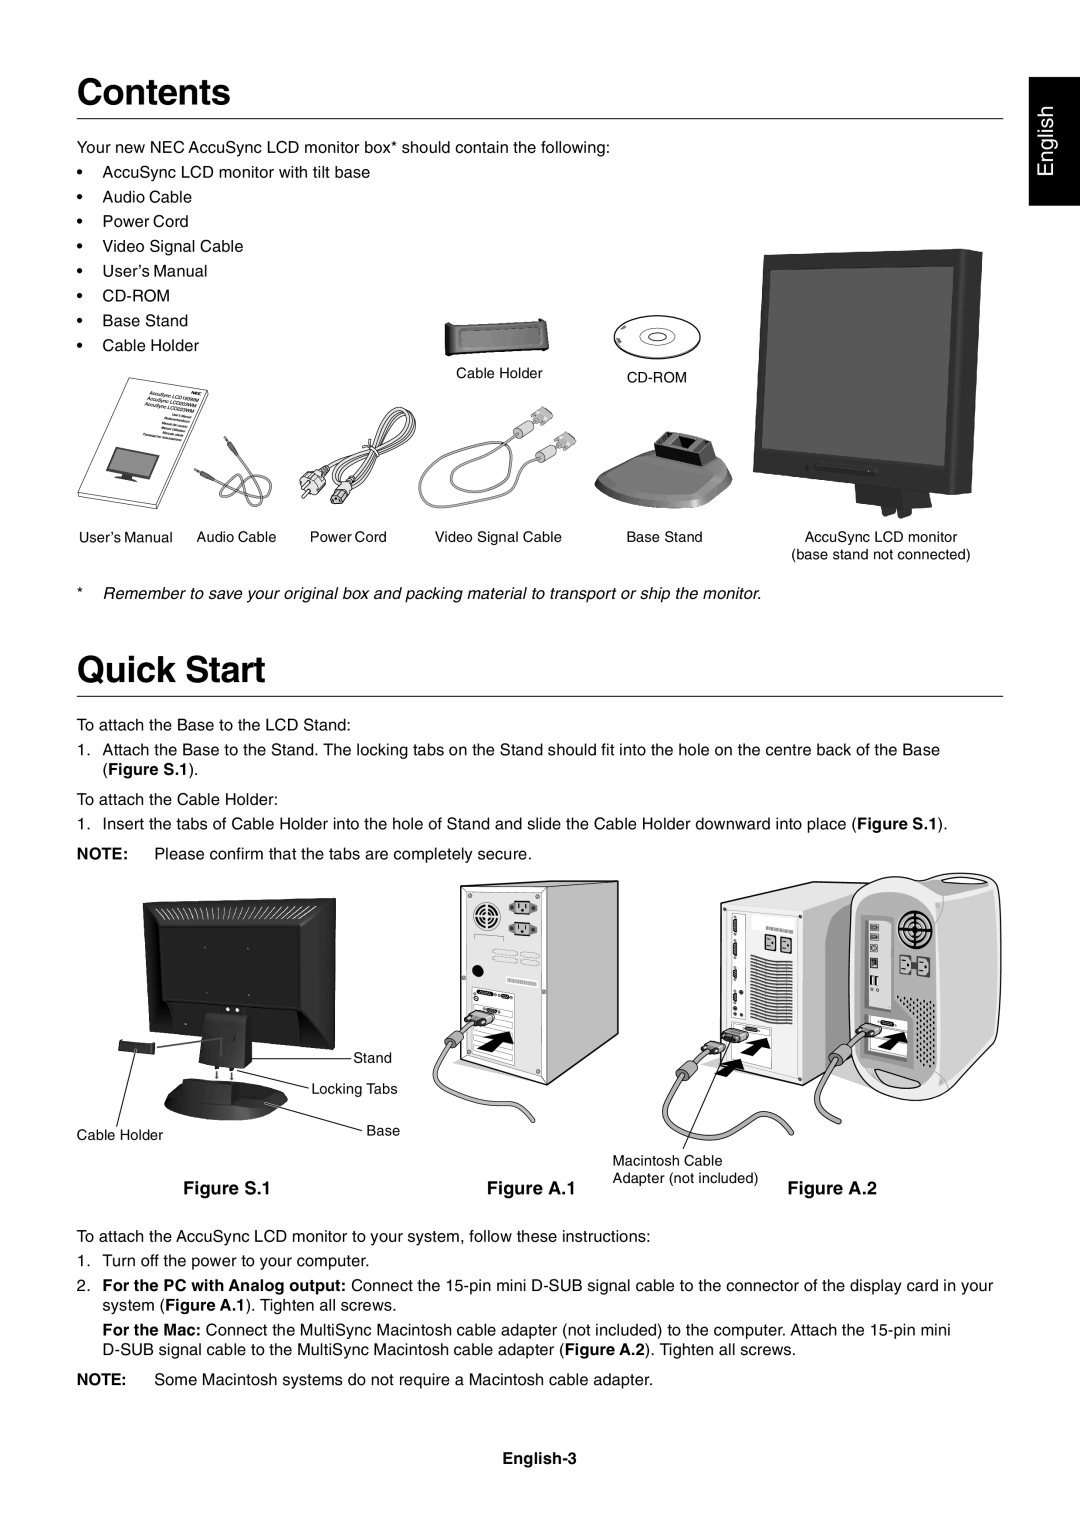 NEC LCD193WM, LCD223WM, LCD203WM user manual Contents, Quick Start, English, Figure S.1, Figure A.1, Figure A.2 